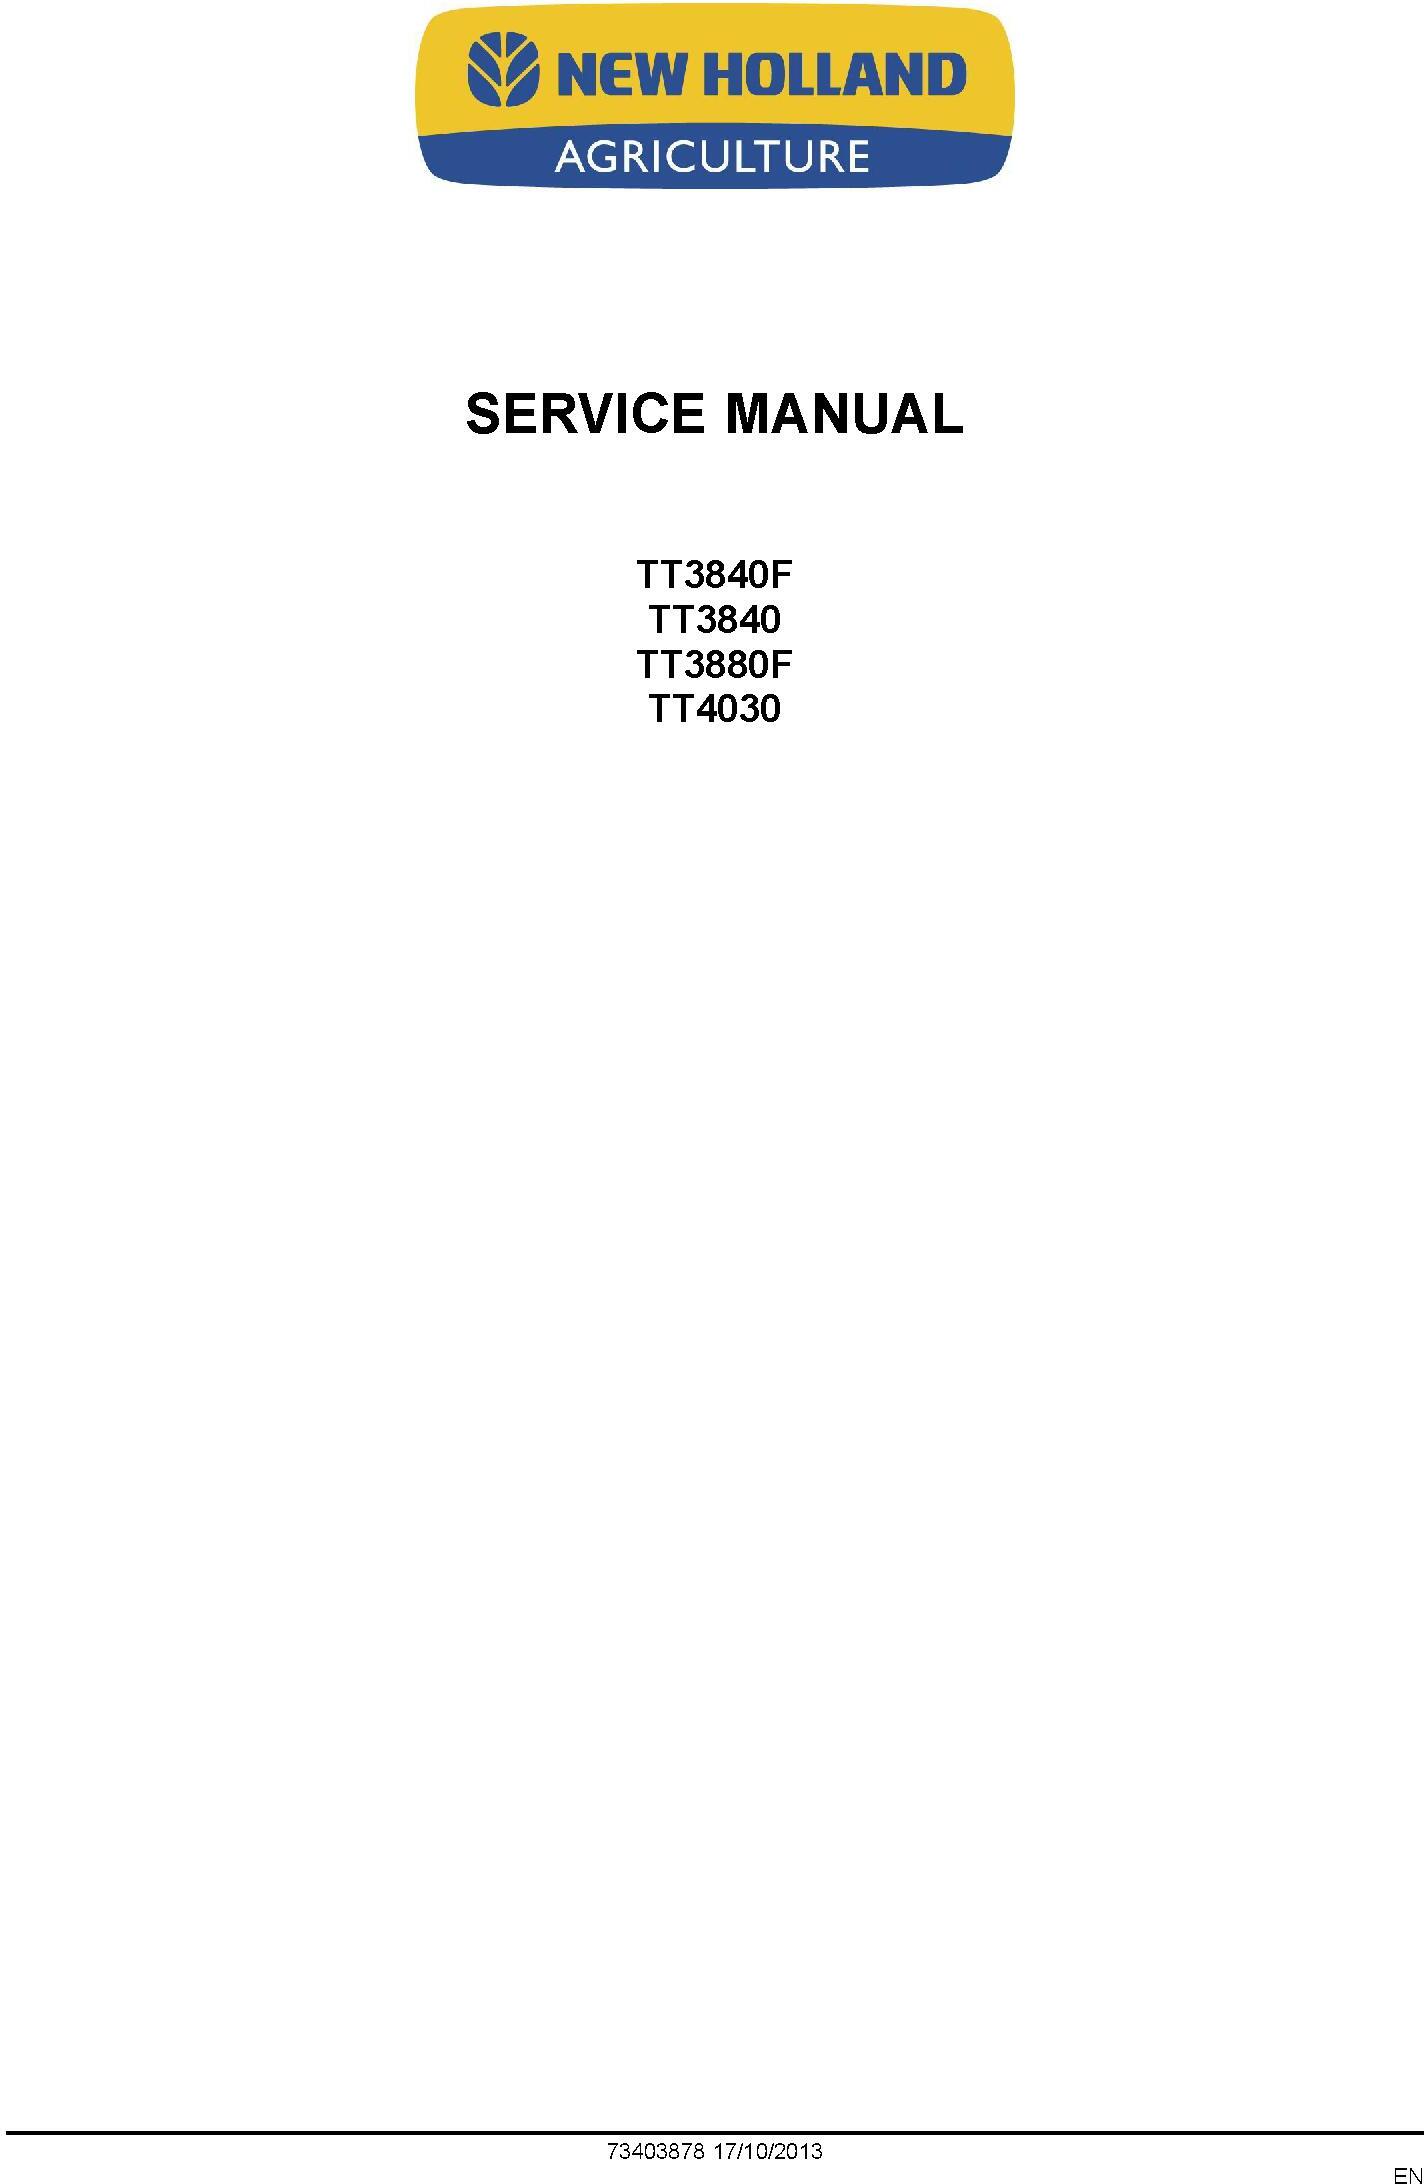 New Holland TT3840, TT3840F, TT3880F, TT4030 Tractors Service Manual - 19998